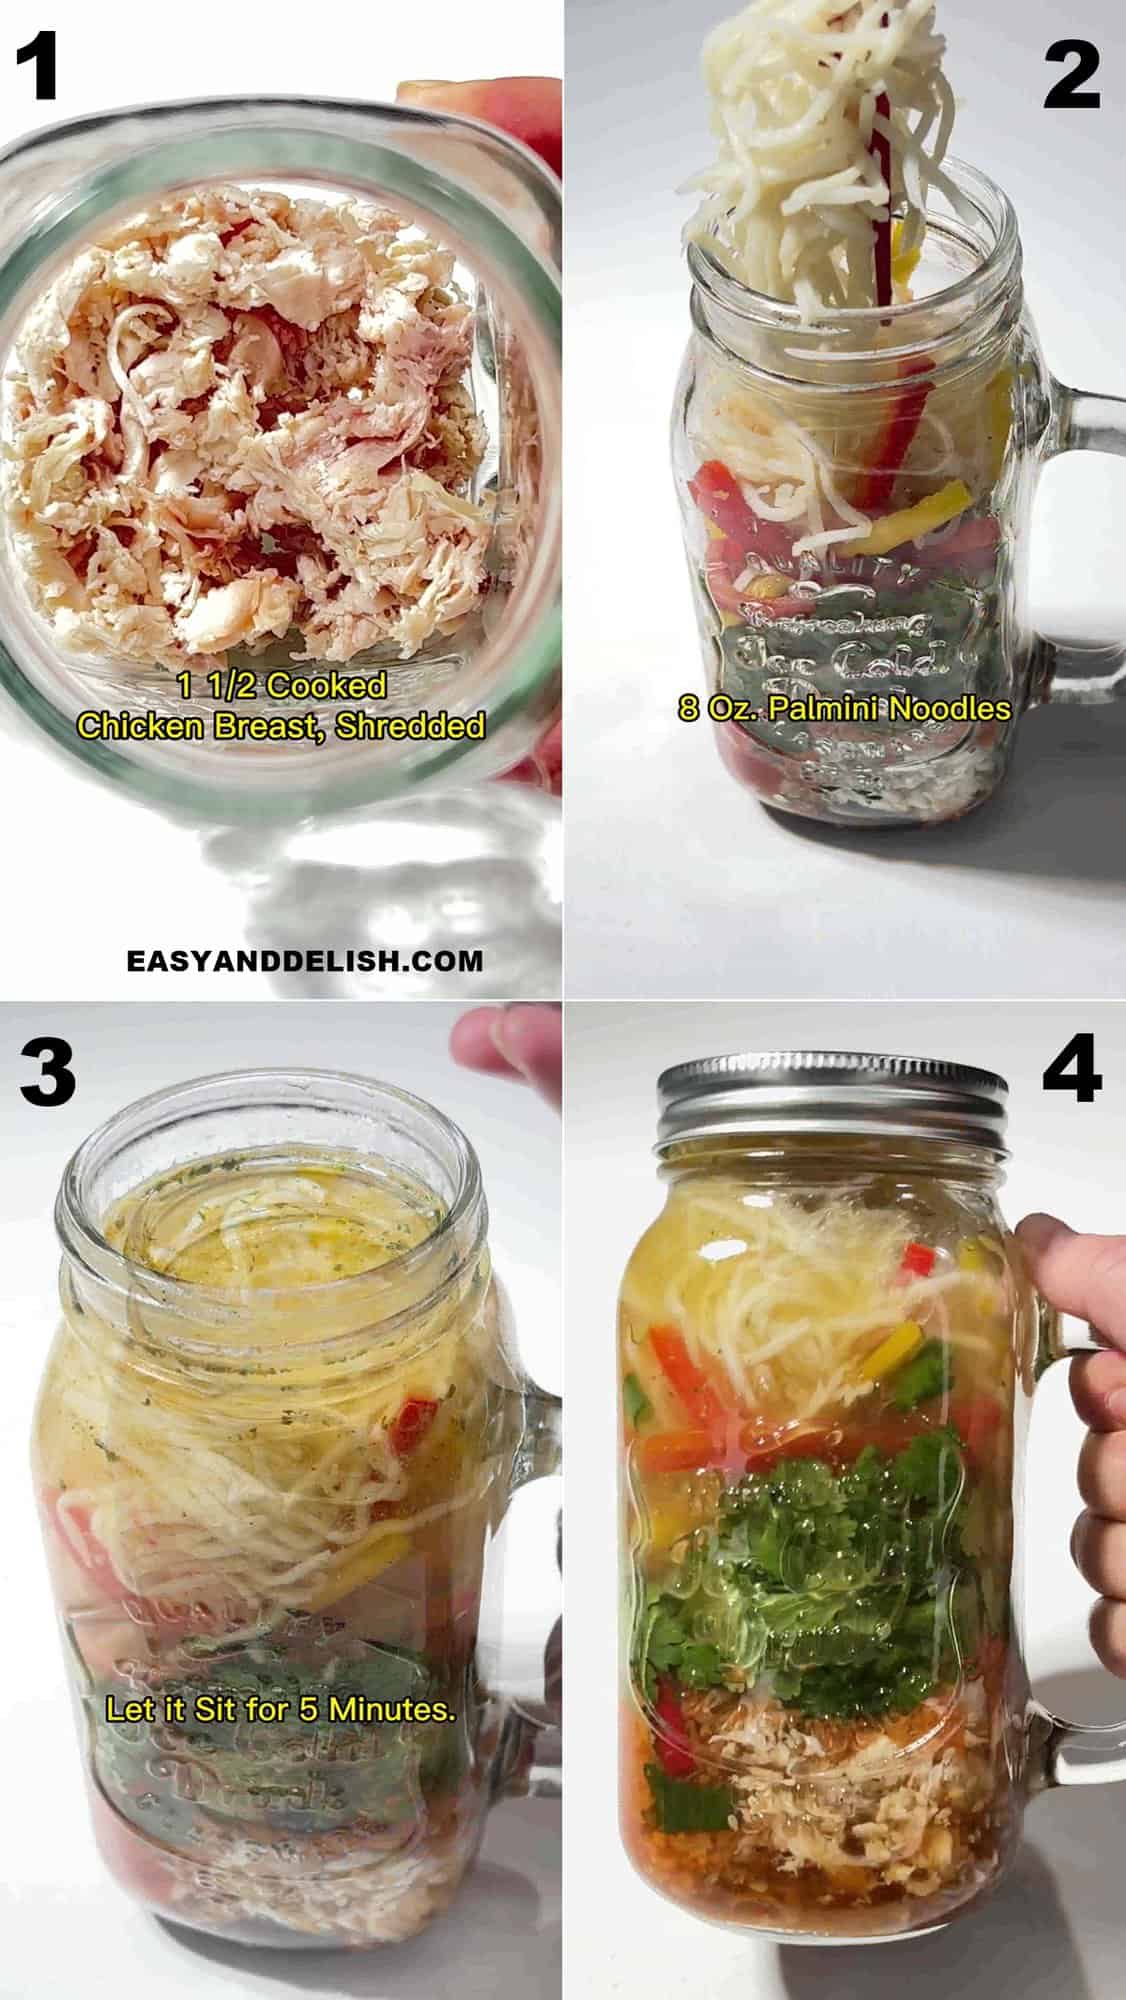 Here's How to Make Mason Jar Soups